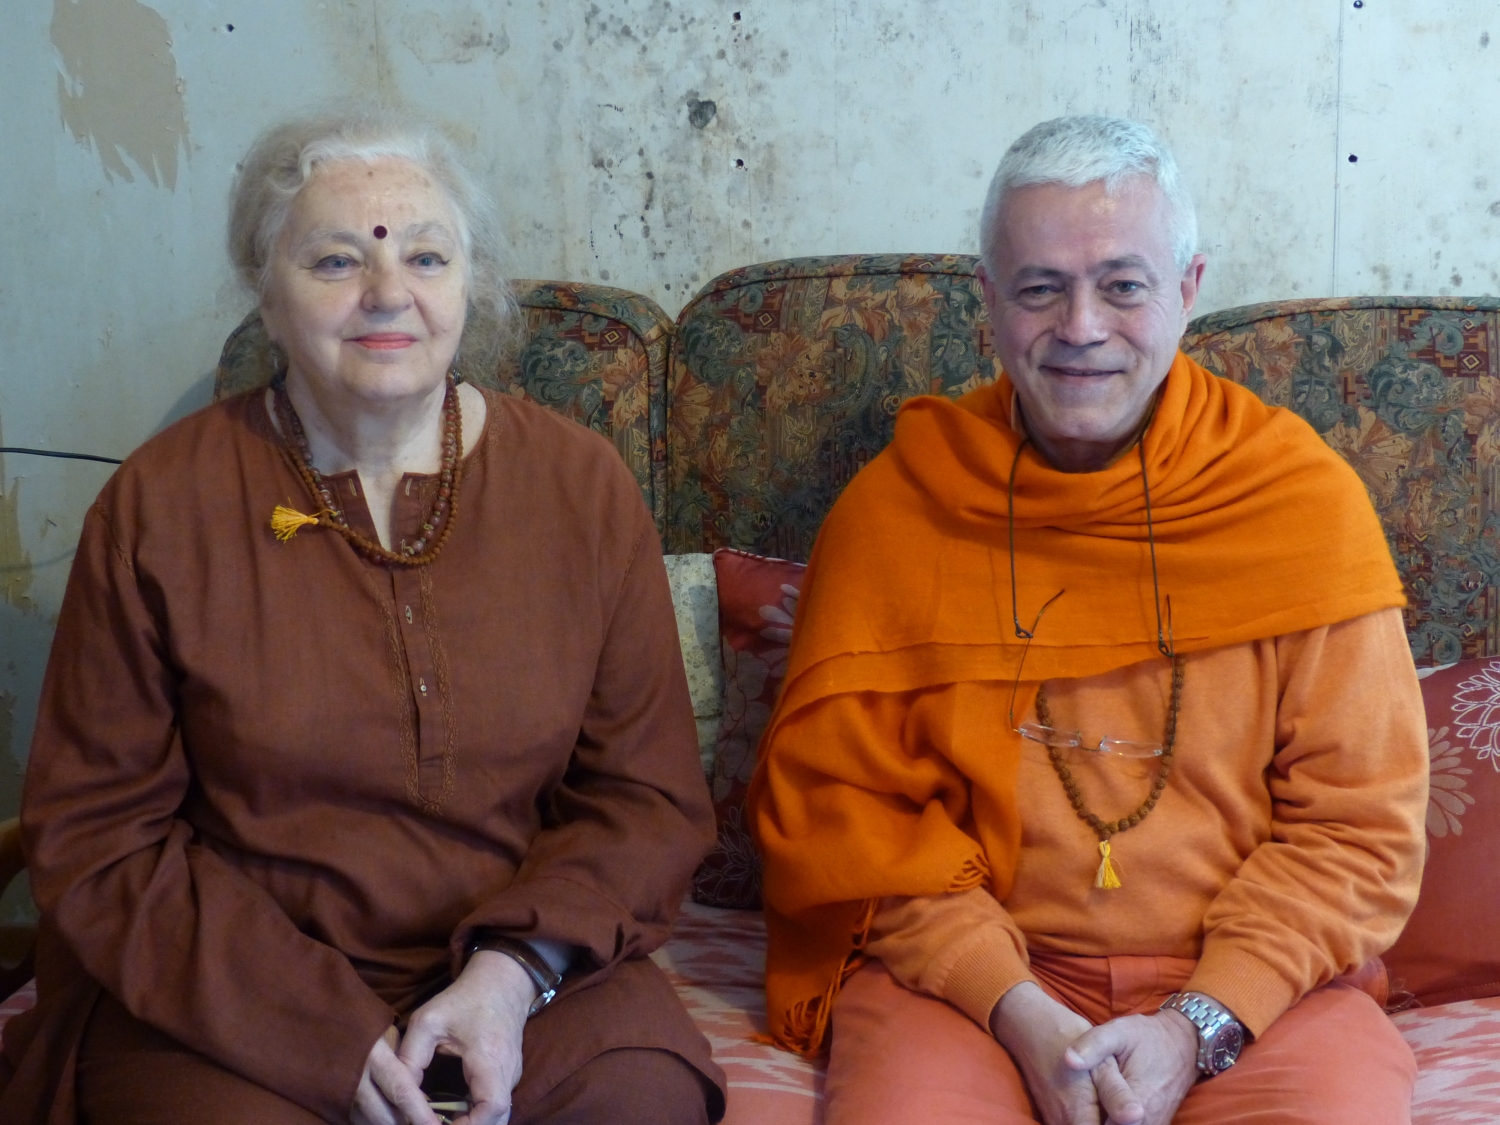 Encuentro de H.H. Jagat Guru Amrta Sūryānanda Mahā Rāja con Tara Michaël - Arles, Provenza - 2013, mayo